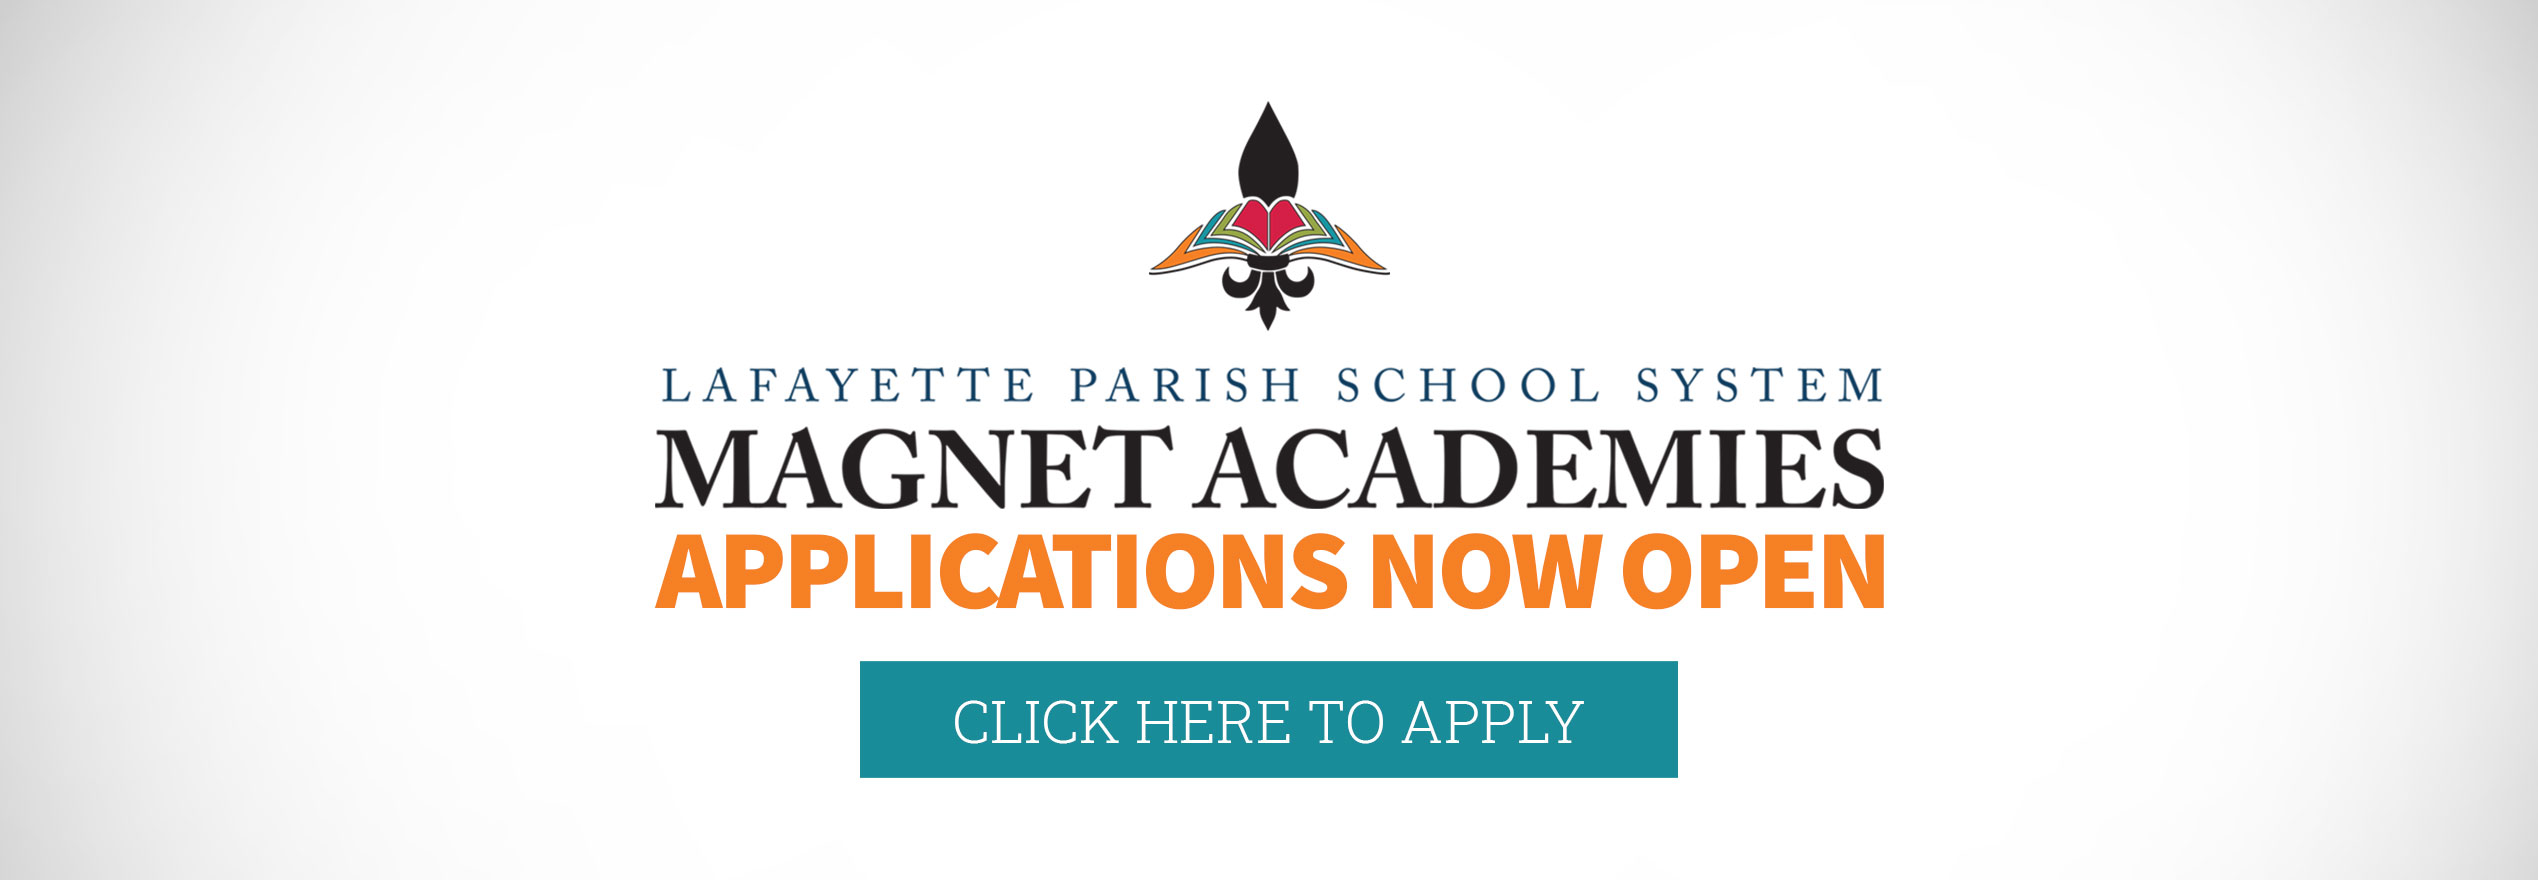 Lafayette Magnet Academies Applications Open